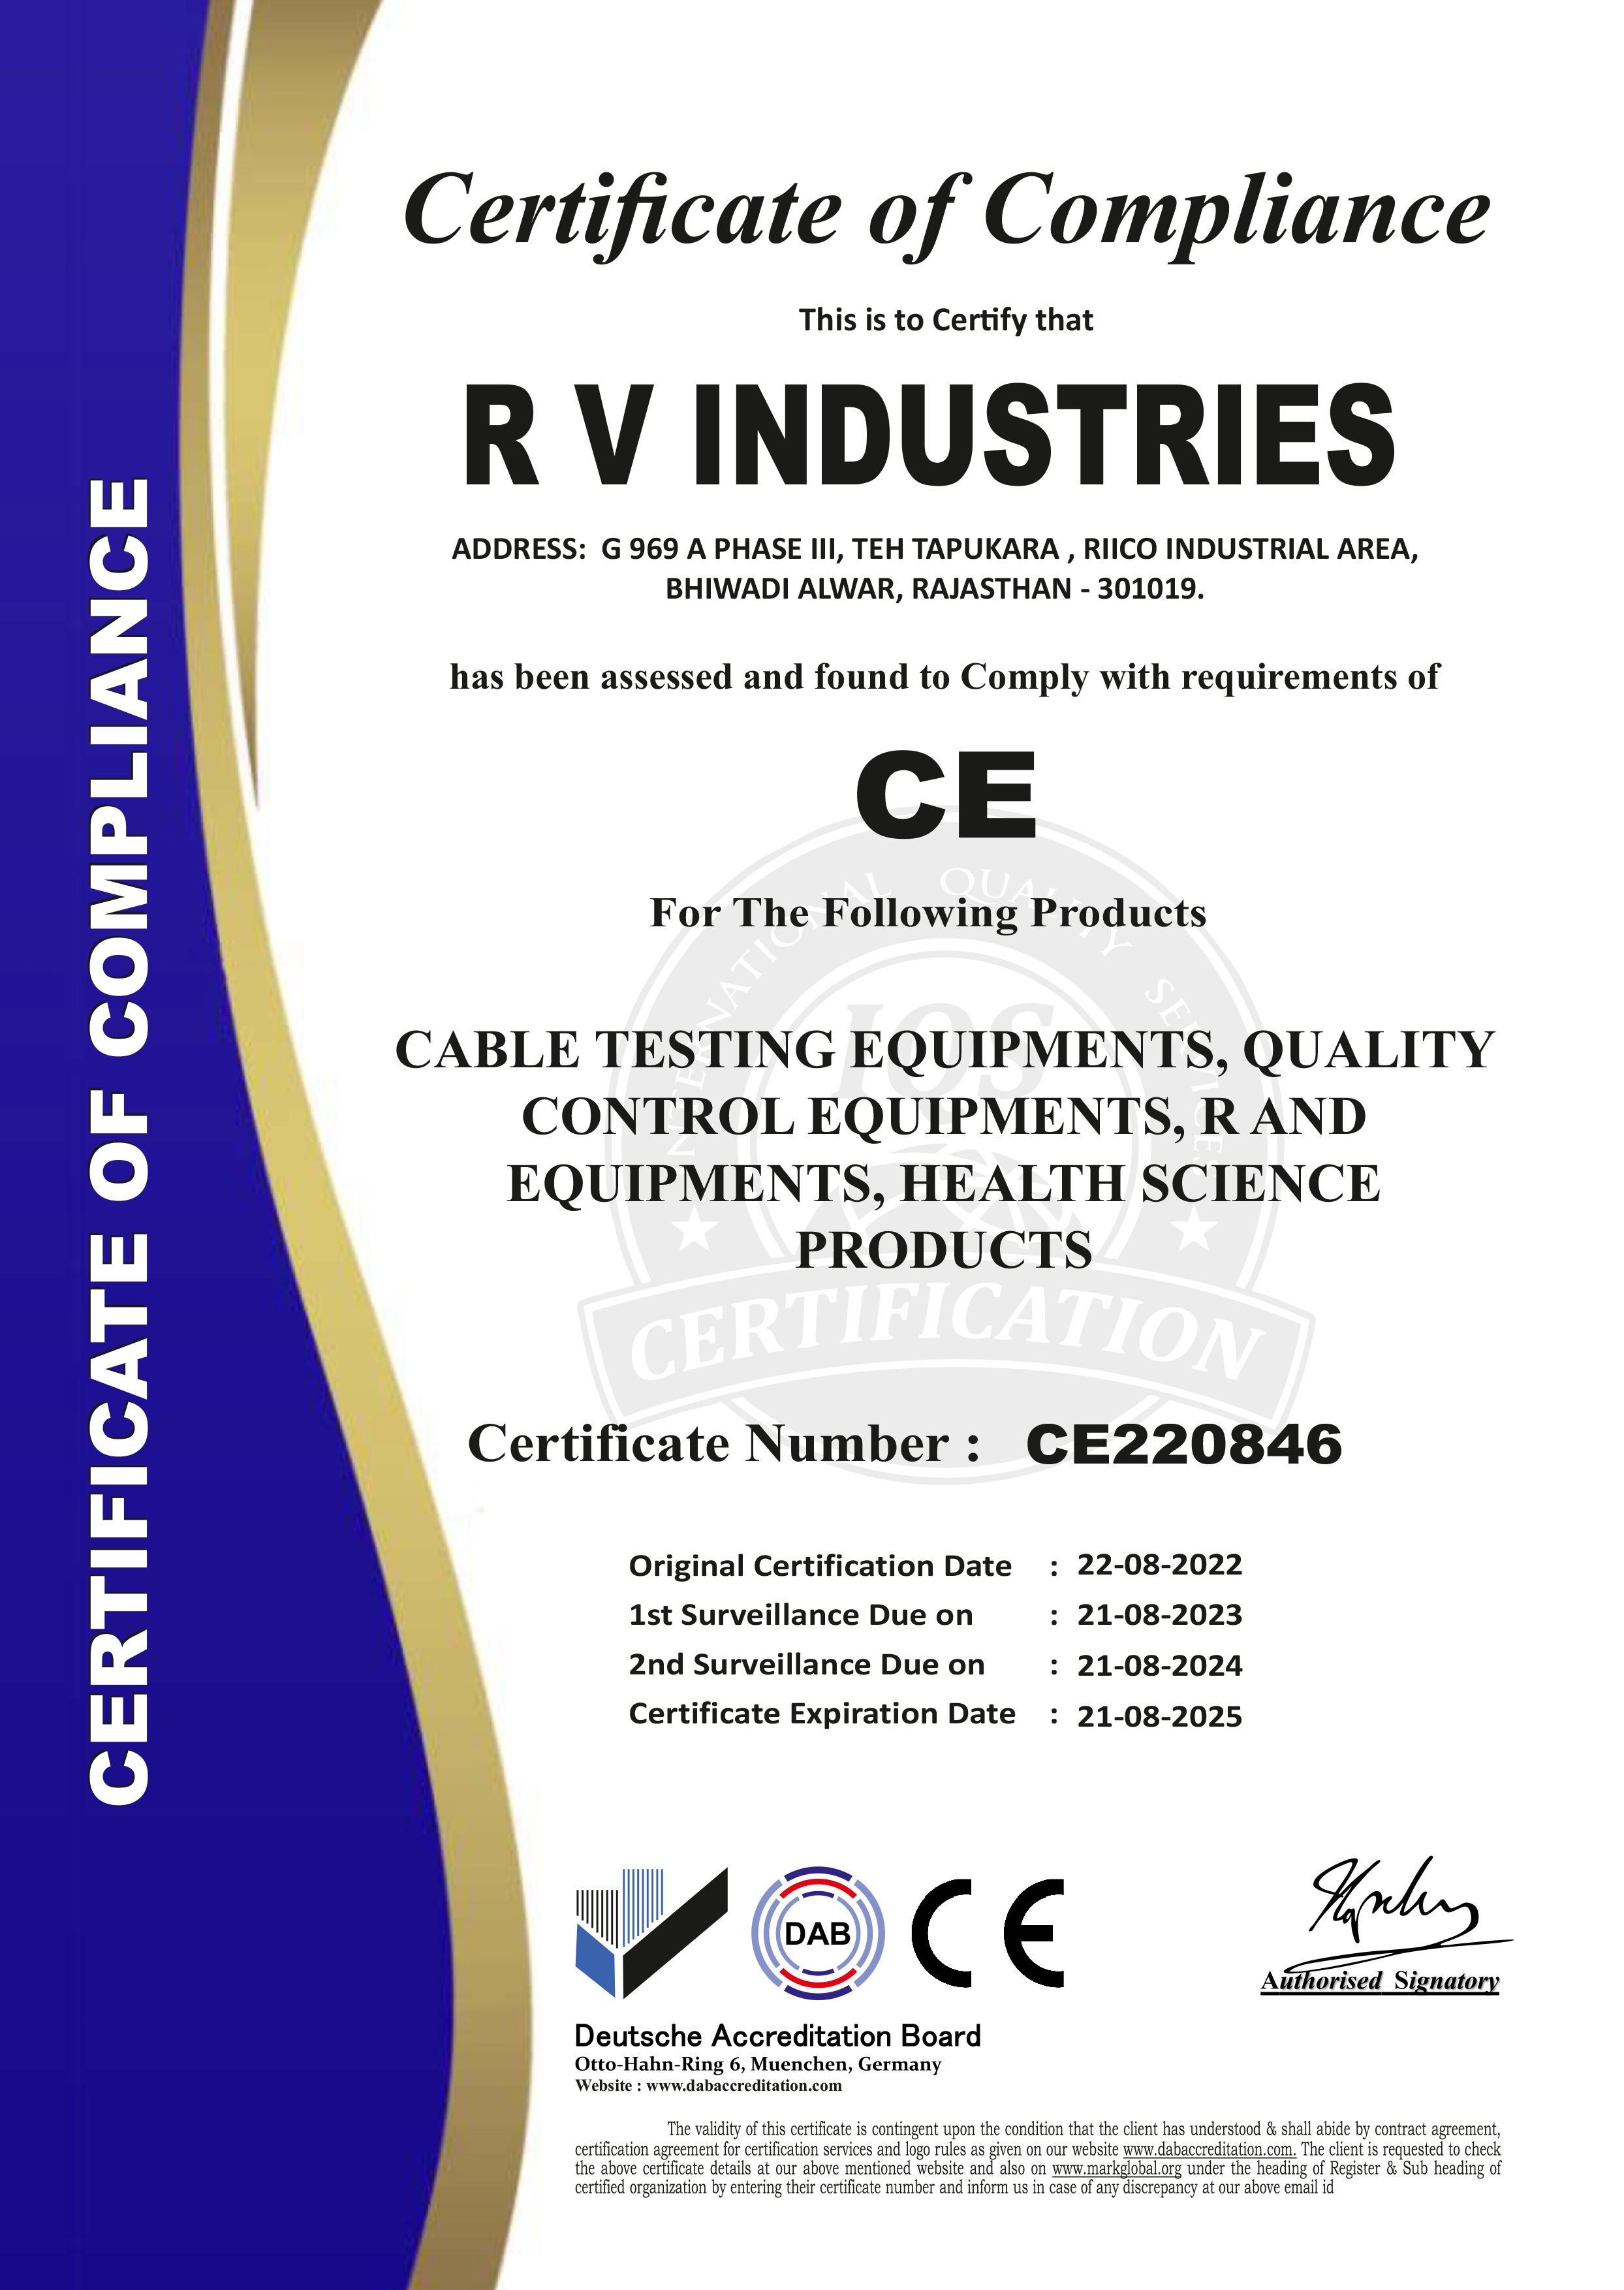 RV Industries Certificates